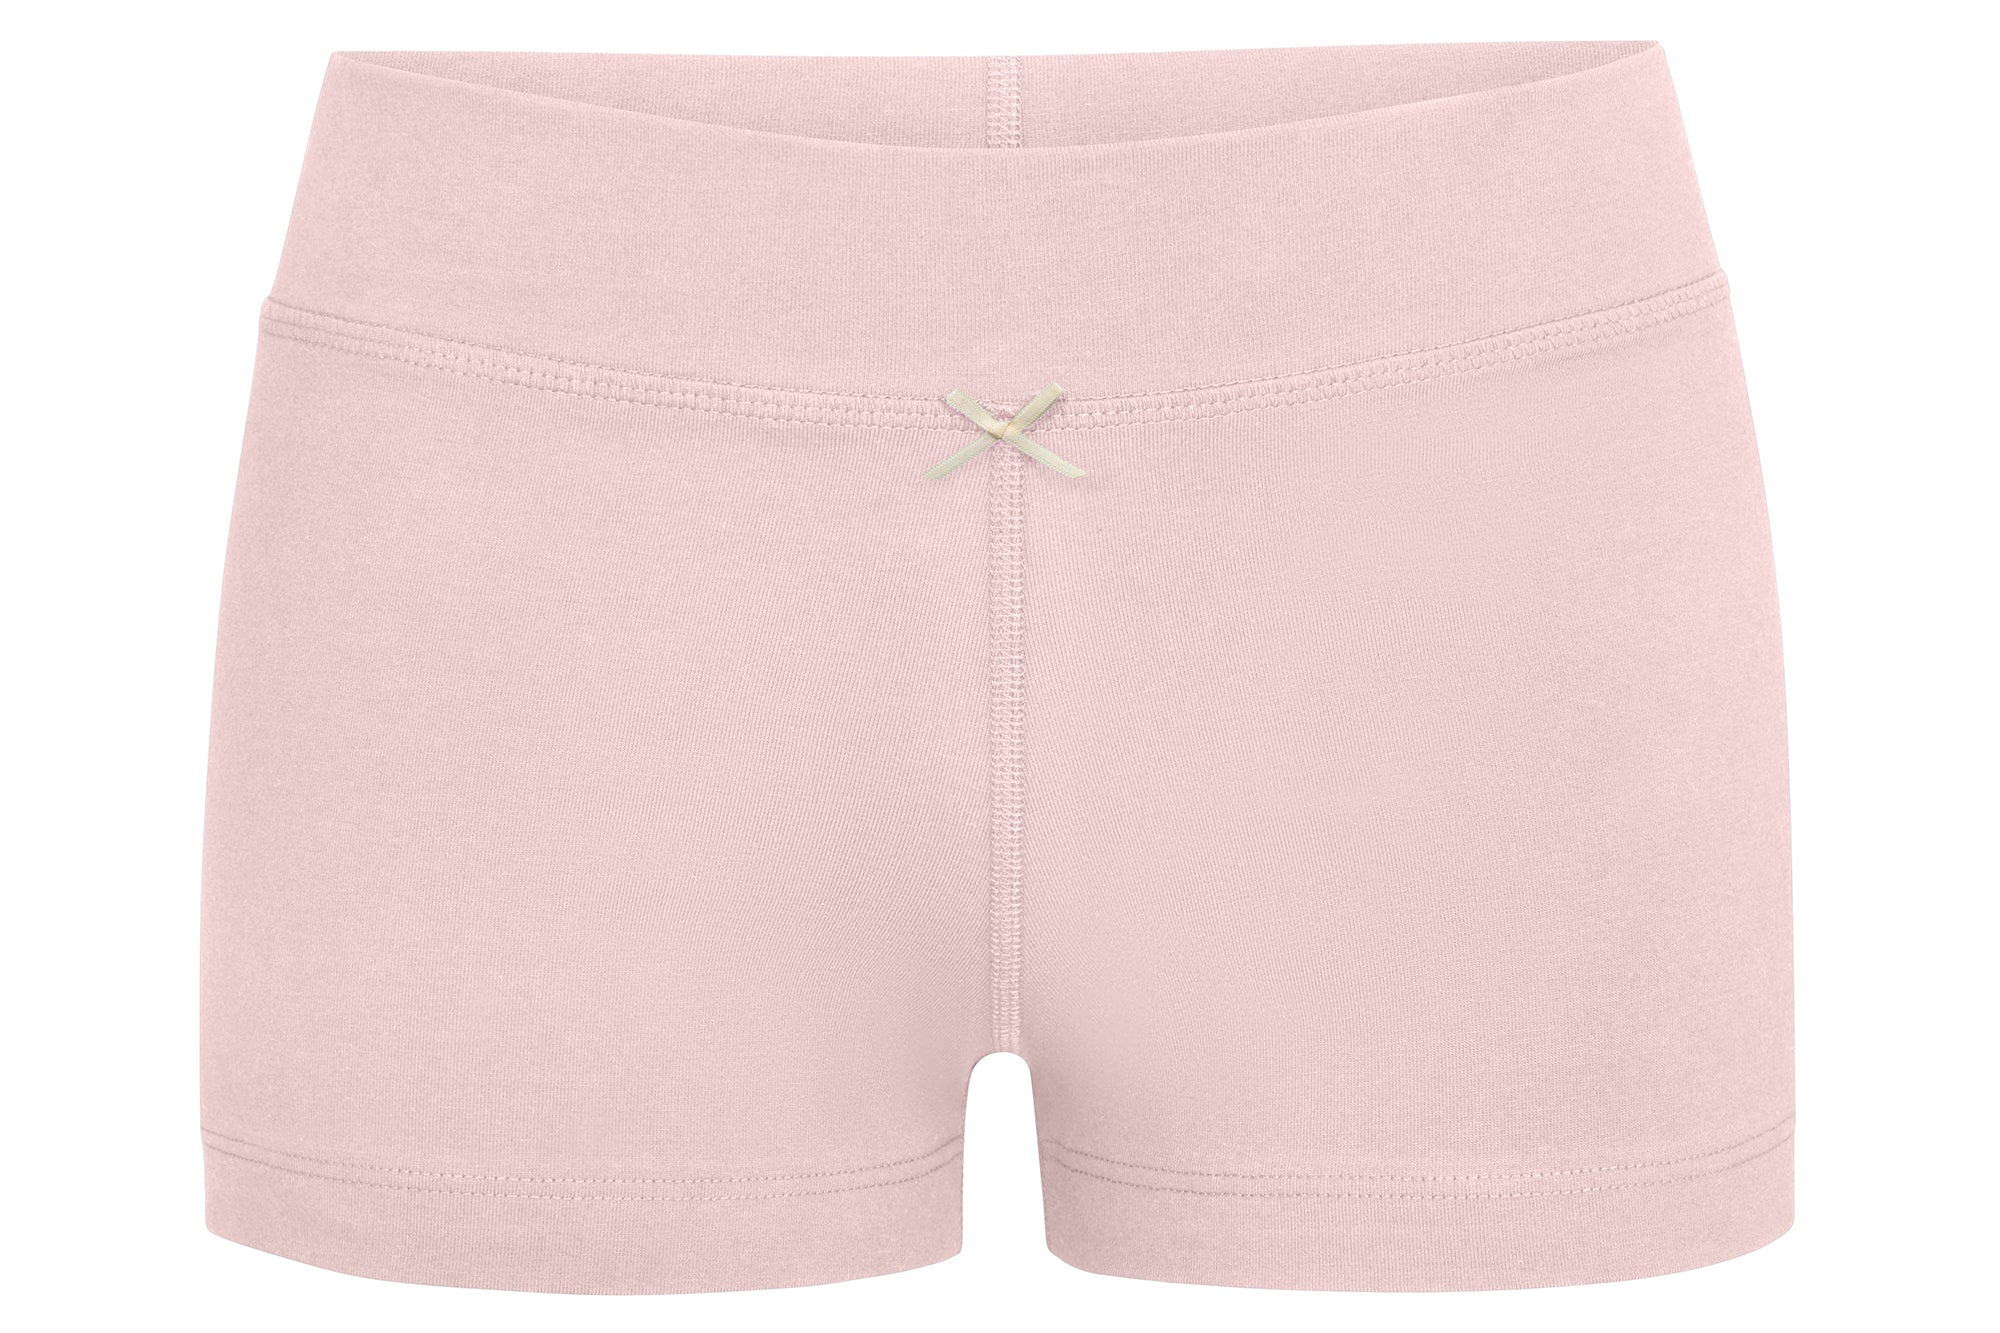 ZELOS, Shorts, 35 Zelos Green Pink Floral Bike Shorts Womens Size Medium